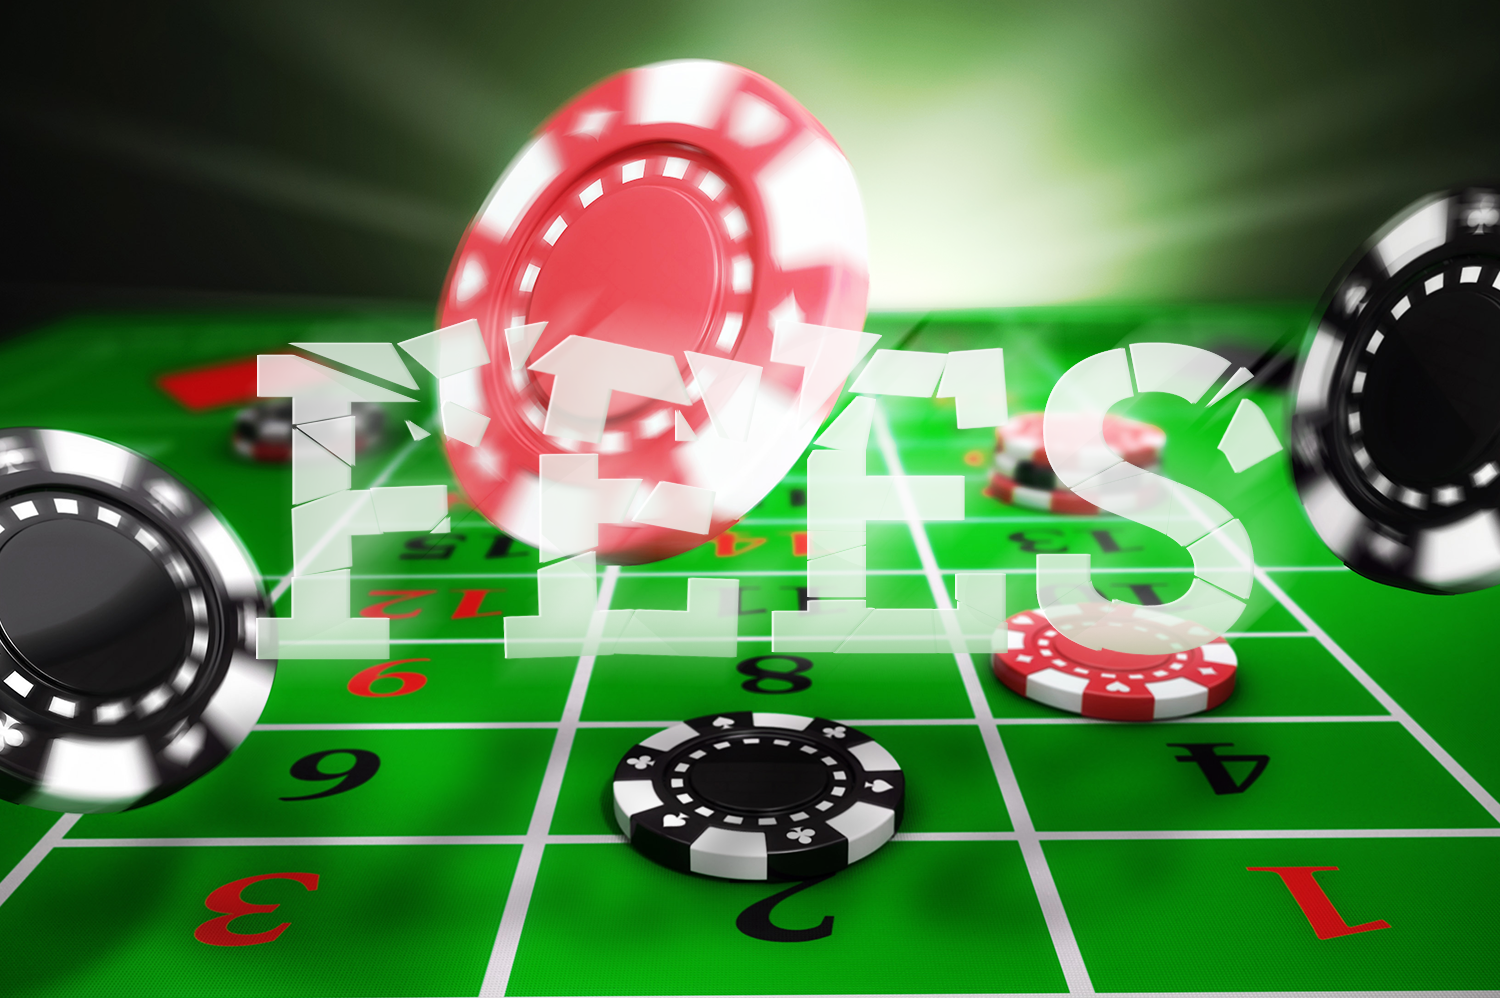 Horseshoe casino dice size and weight